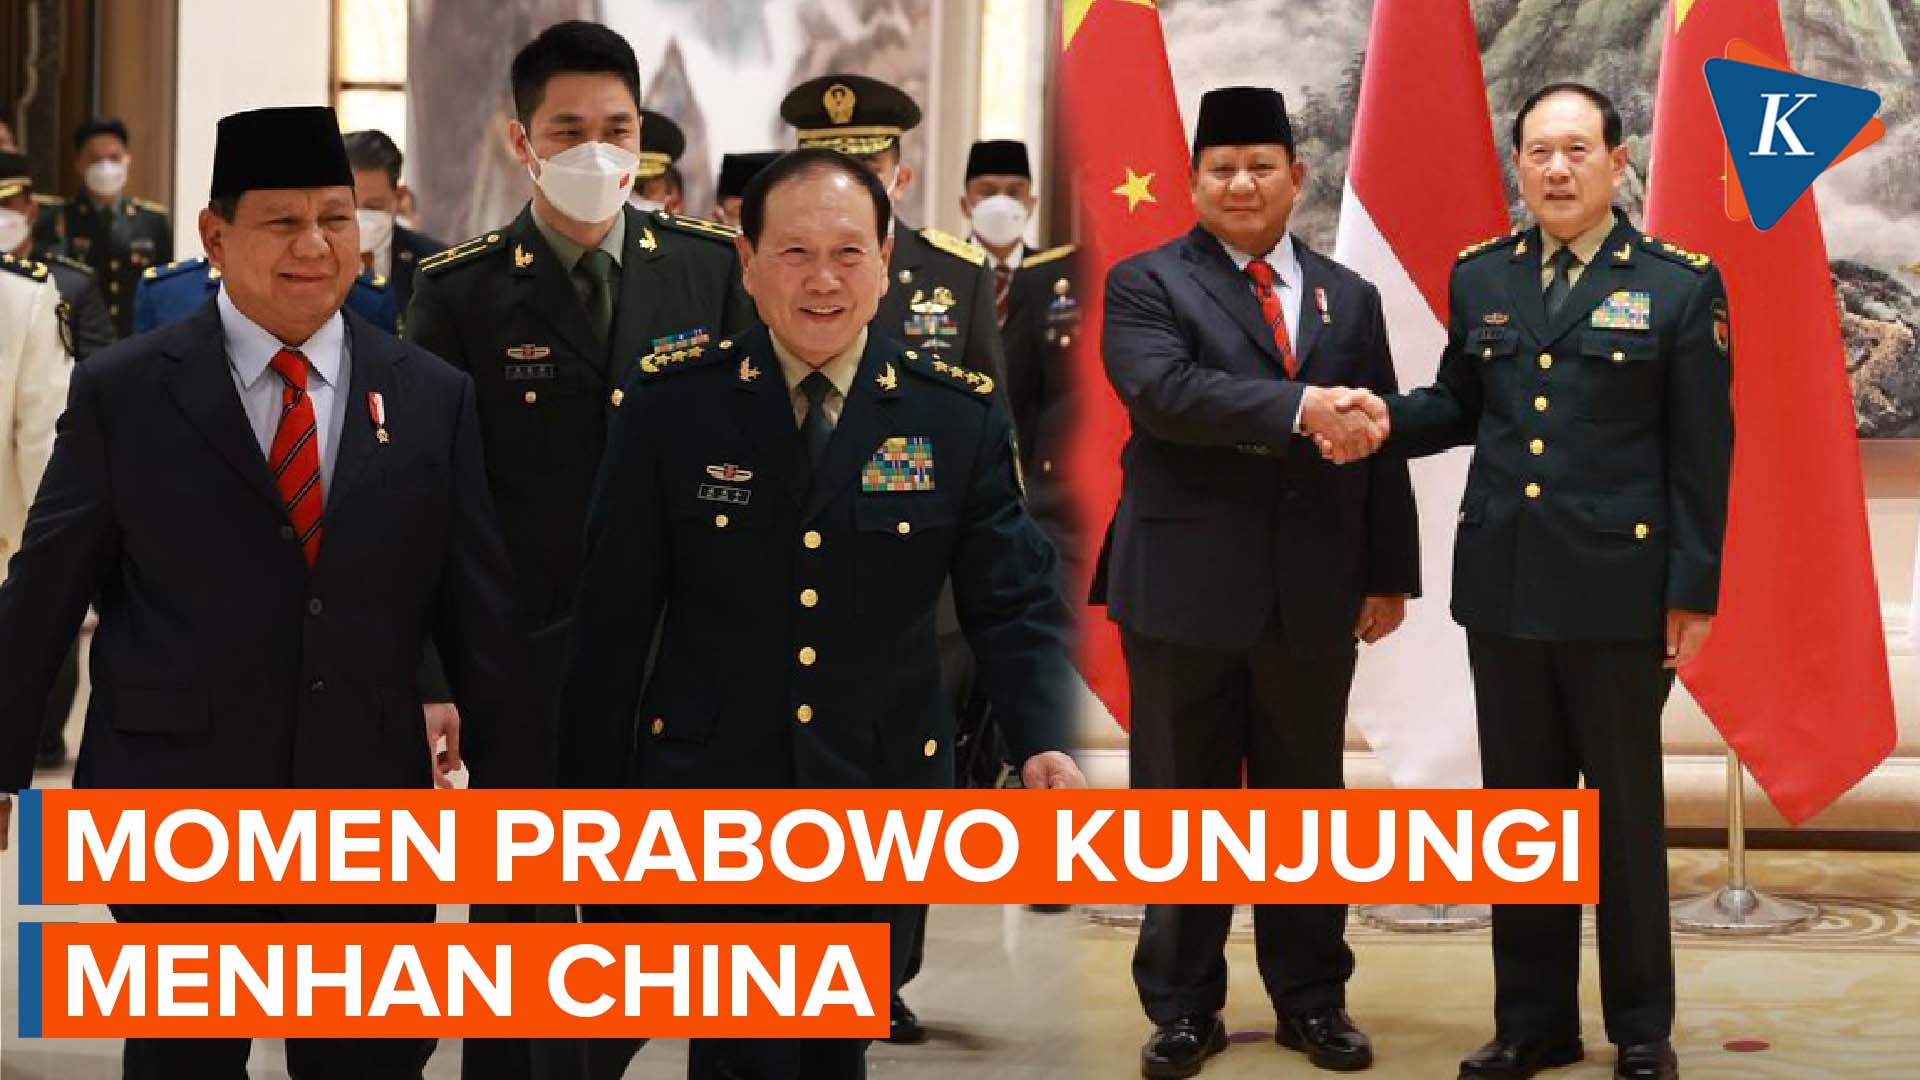 Prabowo Kunjungi Menhan China, Bahas Apa?